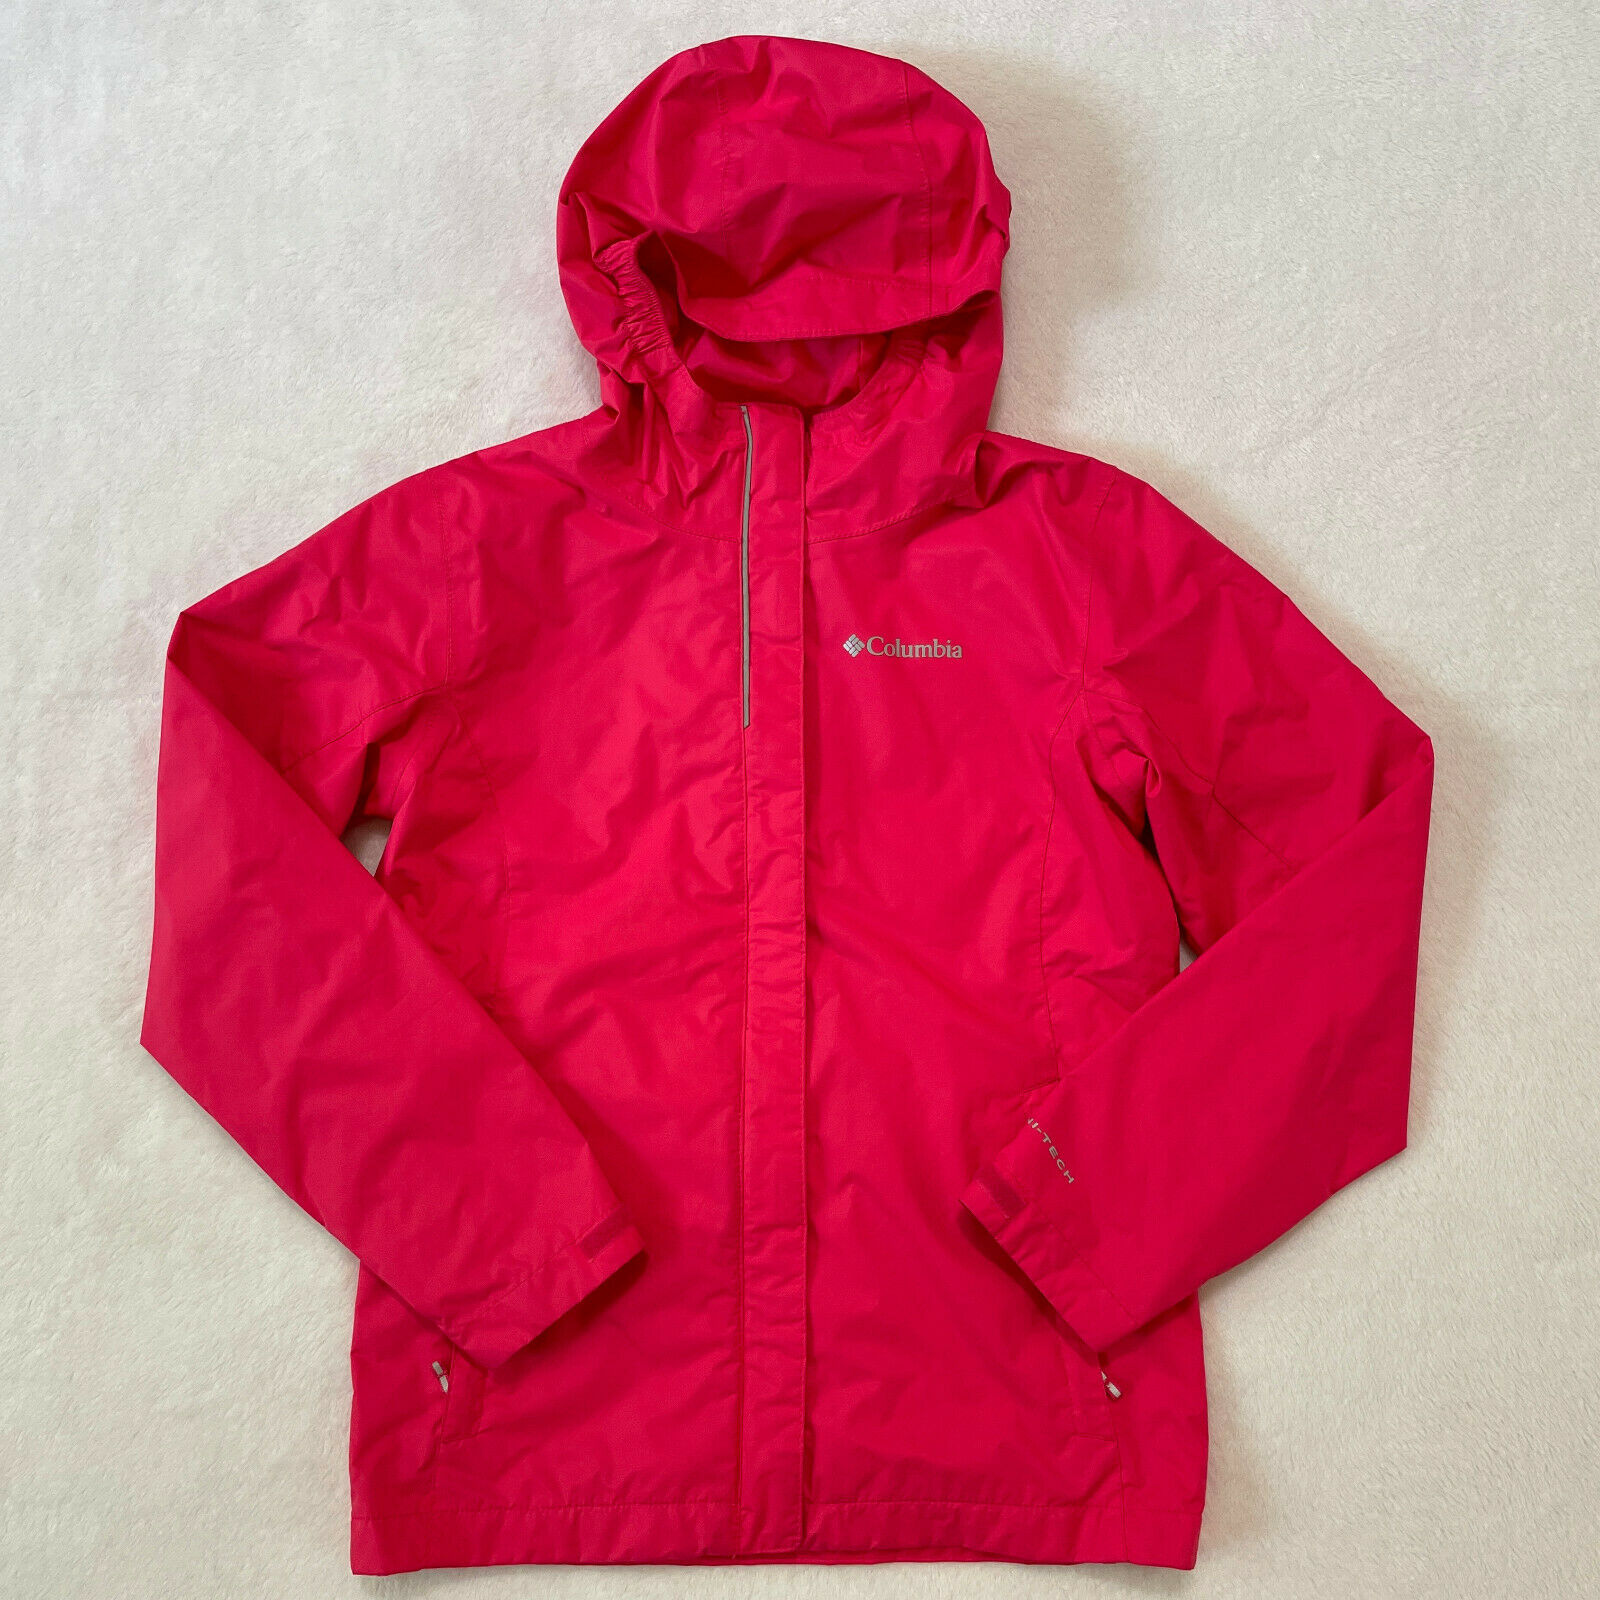 Columbia Rain Jacket Windbreaker Hooded Girls Size M 10/12 Pink Reflective